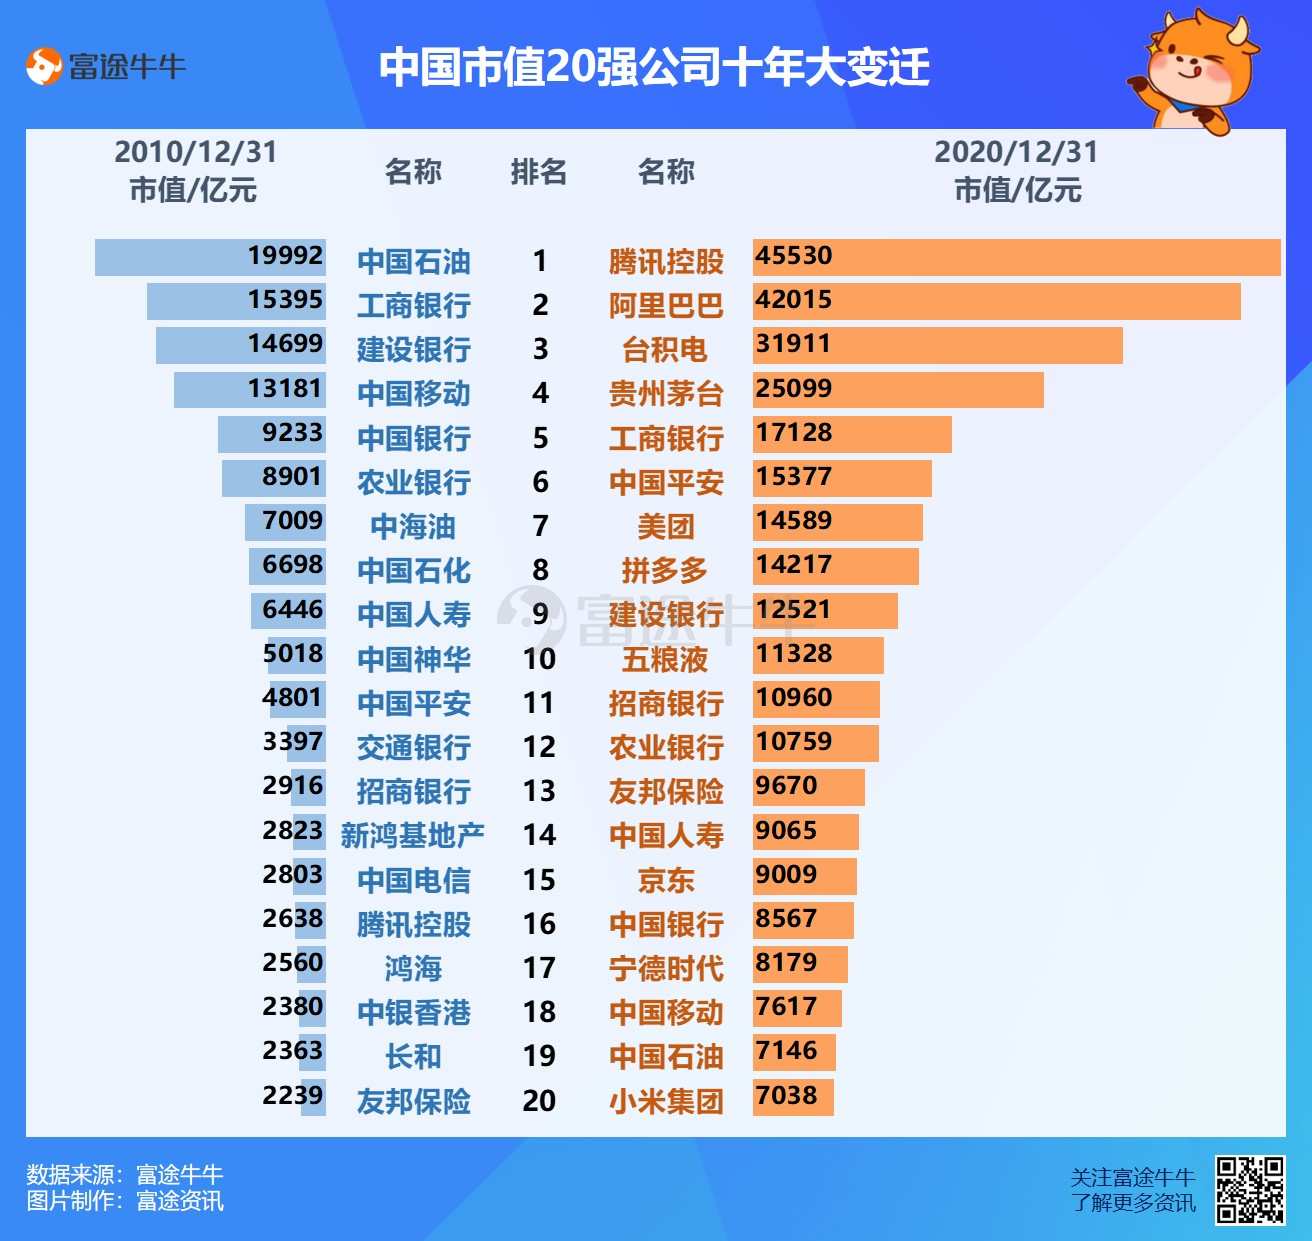 Re: [問卦] 中國是什麼時候超車台灣?